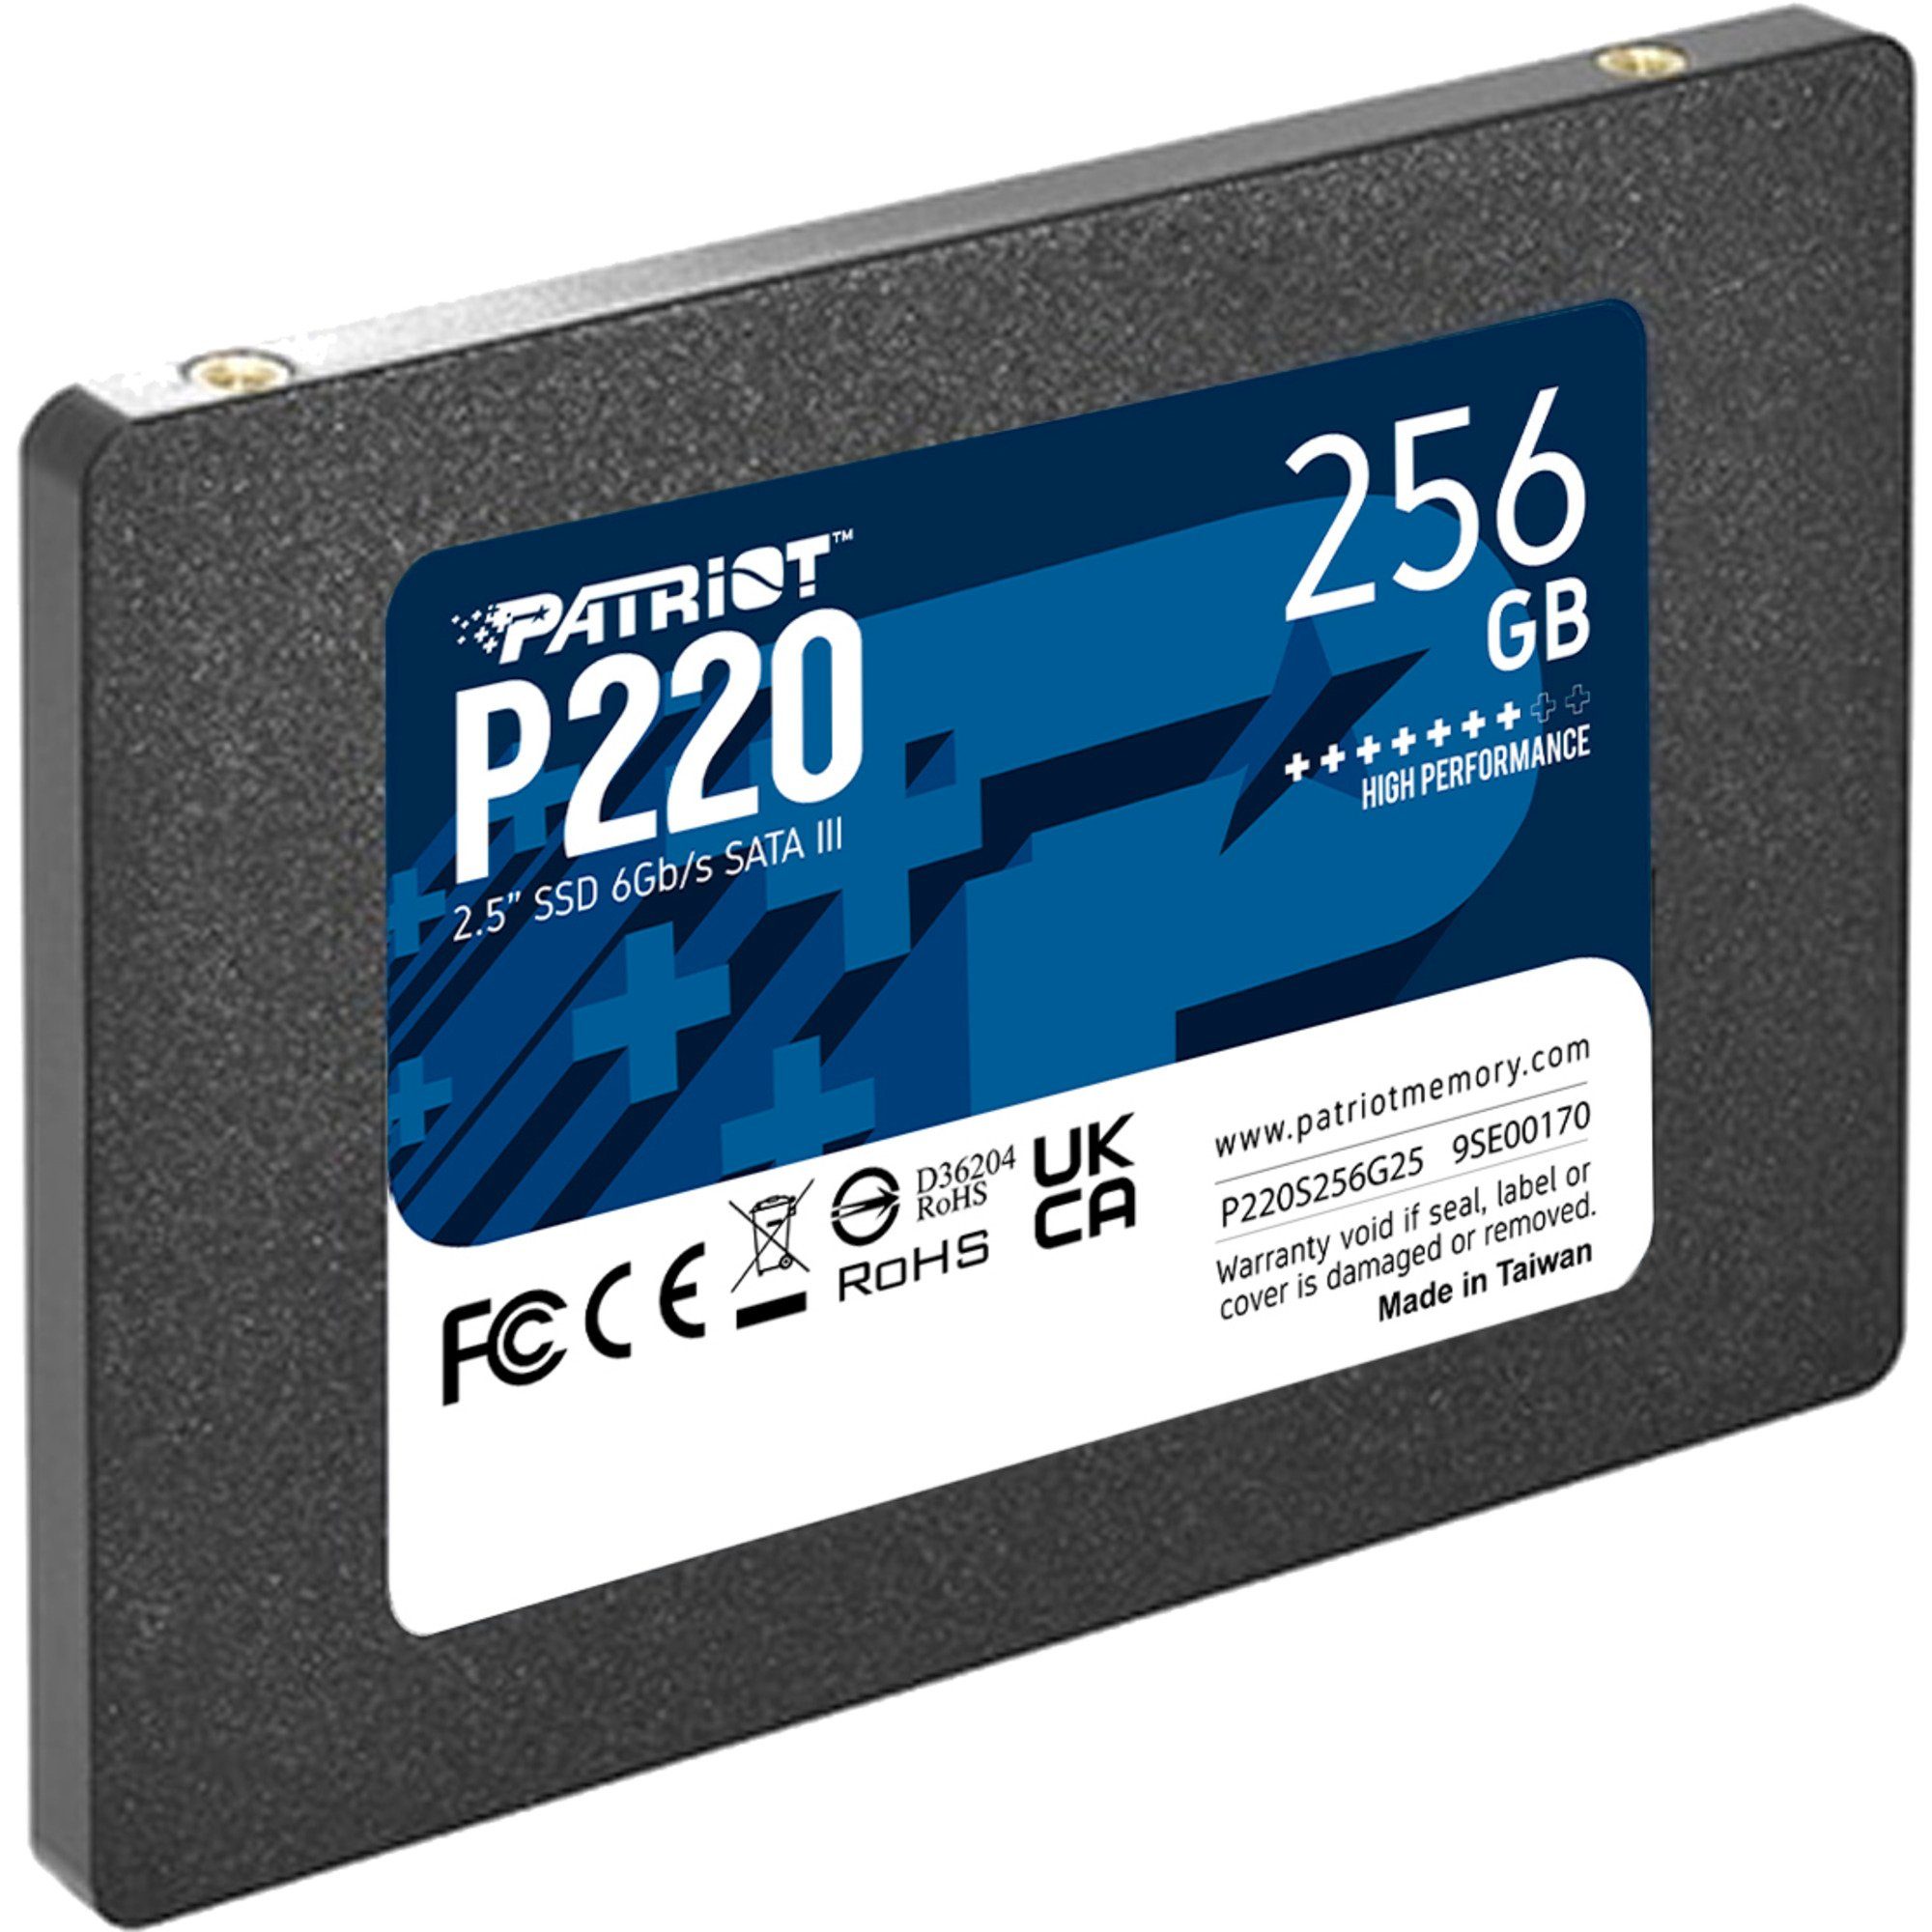 Patriot P220 256 GB SSD-Festplatte (256 GB) 2,5""